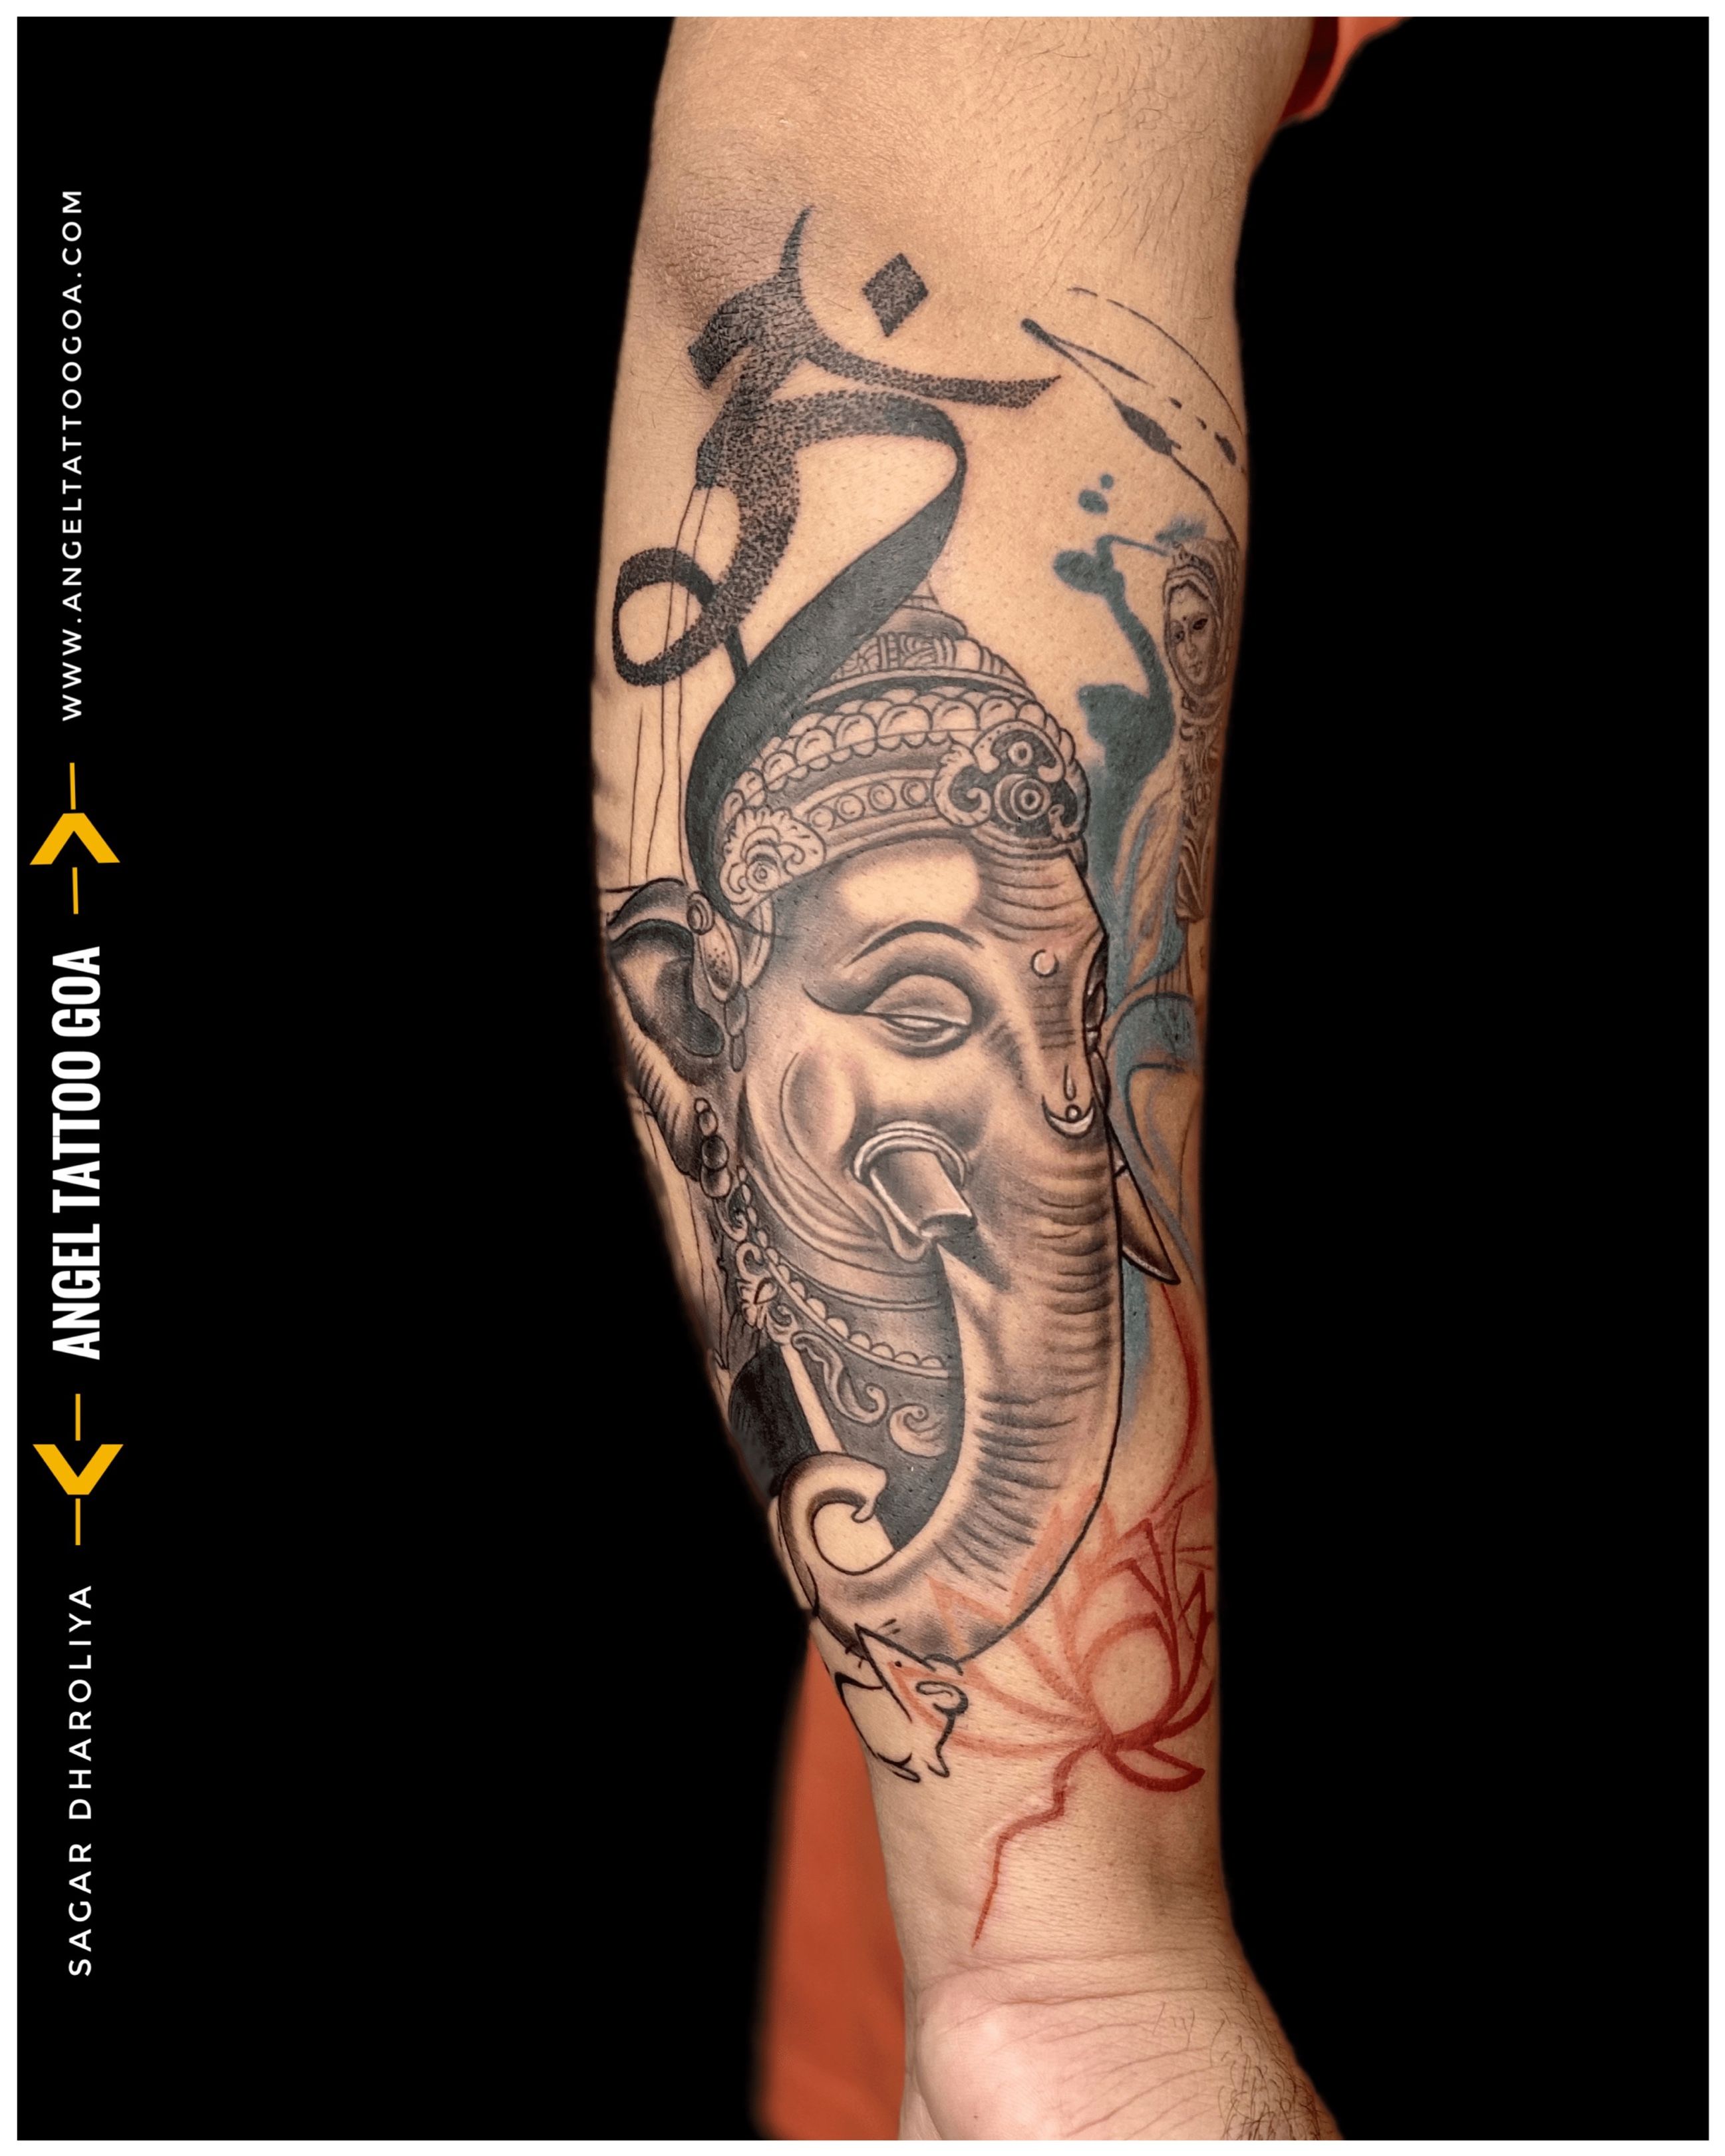 Angel Tattoo Studio Goa - Sagar Dharoliya - Angel Tattoo Studio Goa